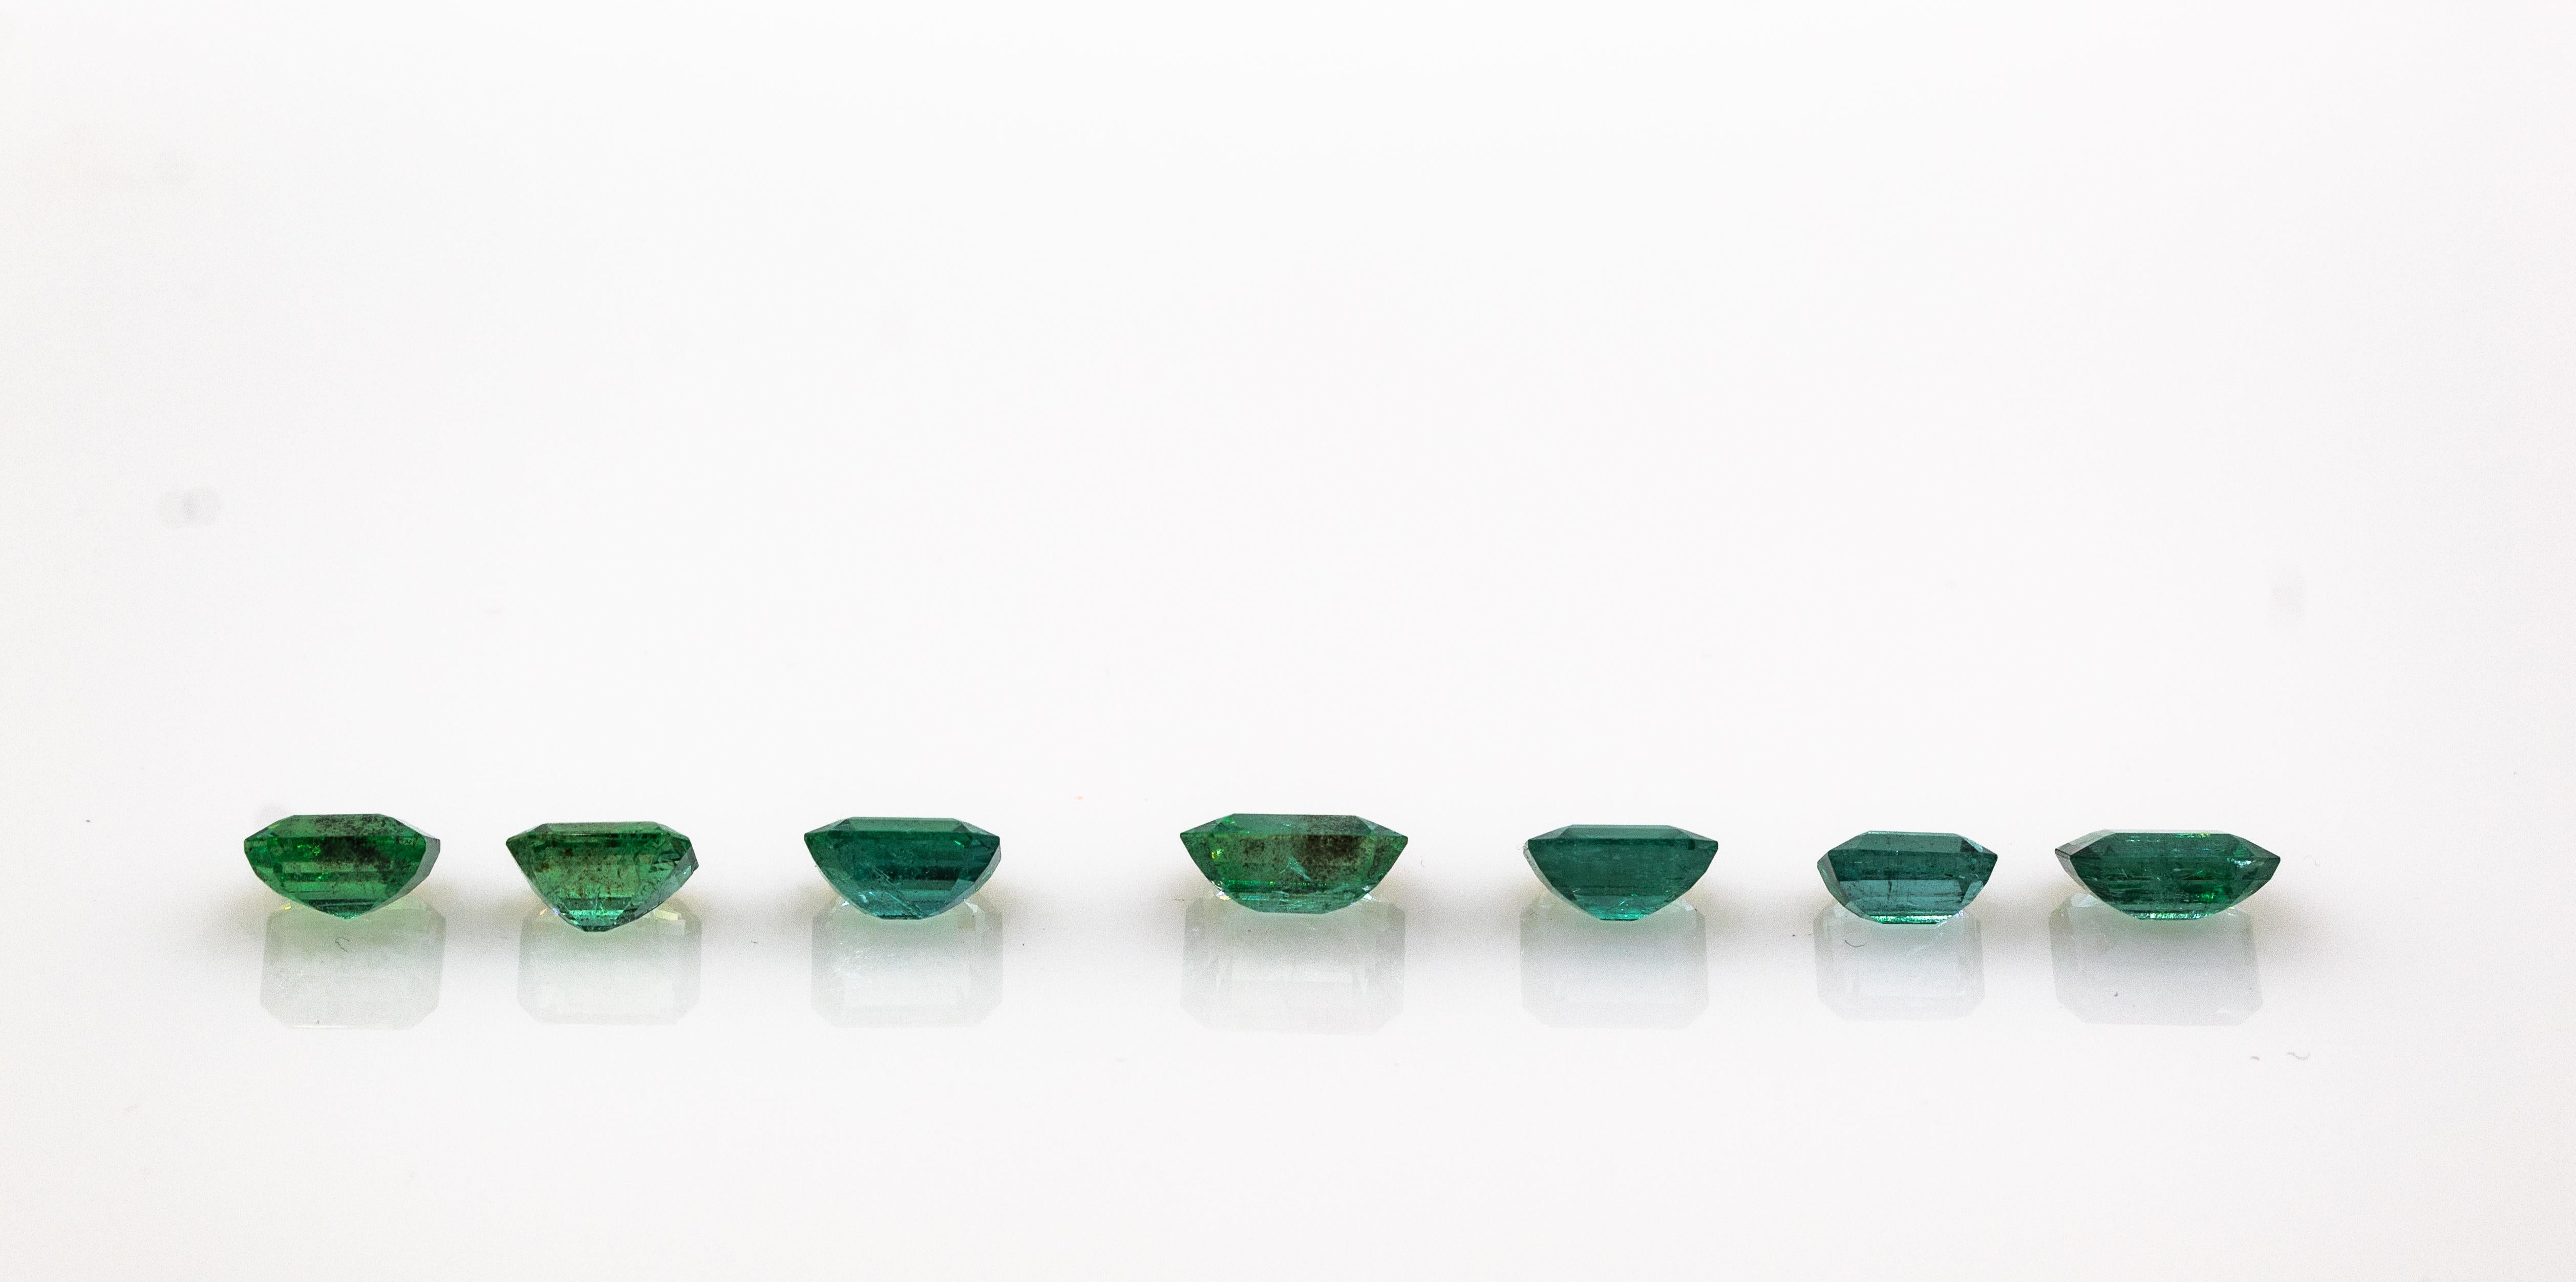 Certifiable Zambia Octagon Cut 2.98 Carat Emerald Loose Gemstone 6